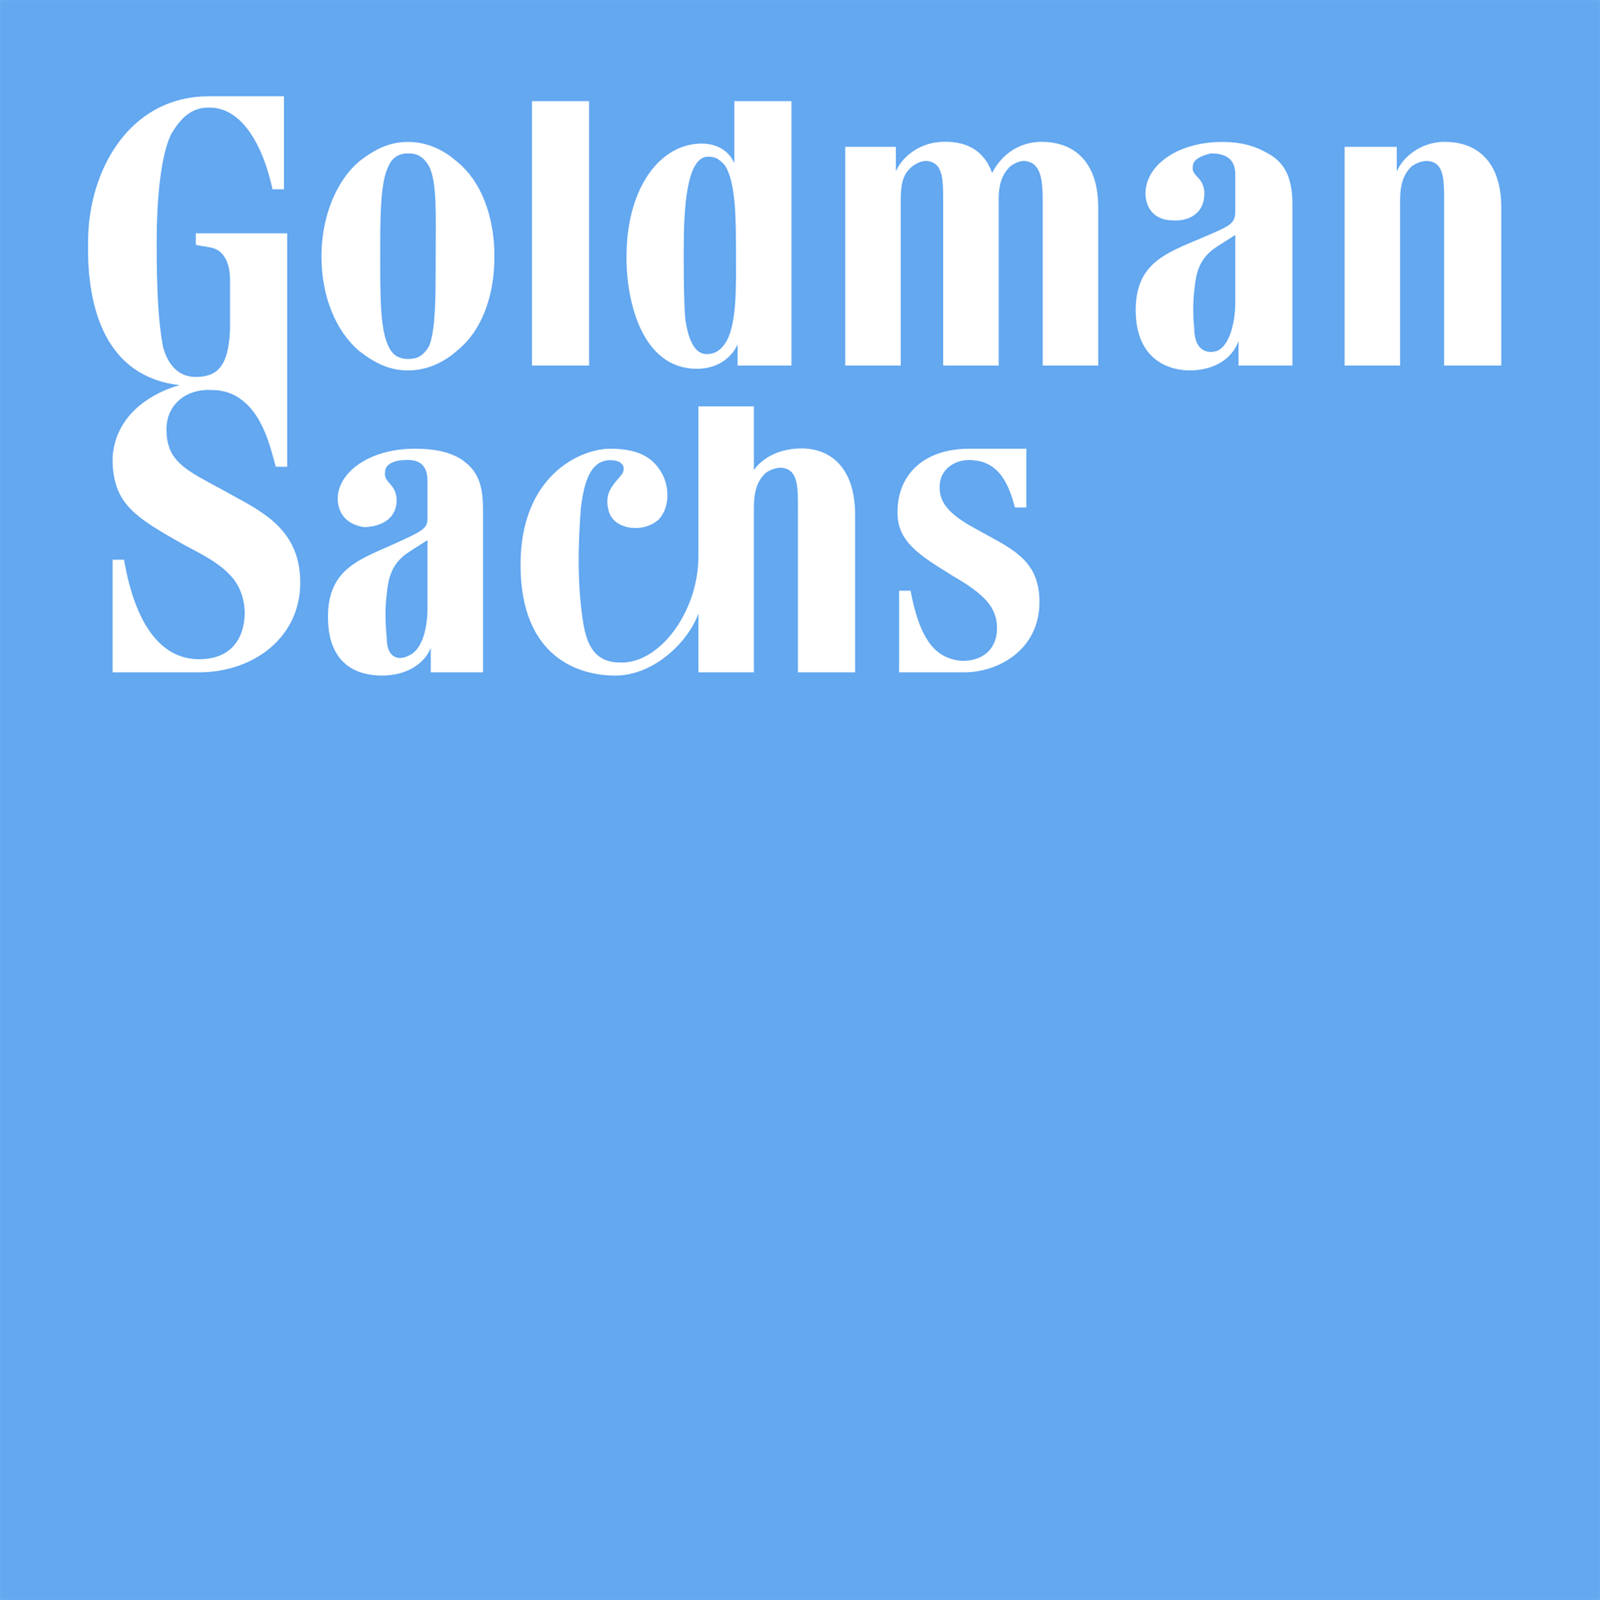 Blue Square Company Logo - Goldman Sachs Logo, Goldman Sachs Symbol Meaning, History and Evolution